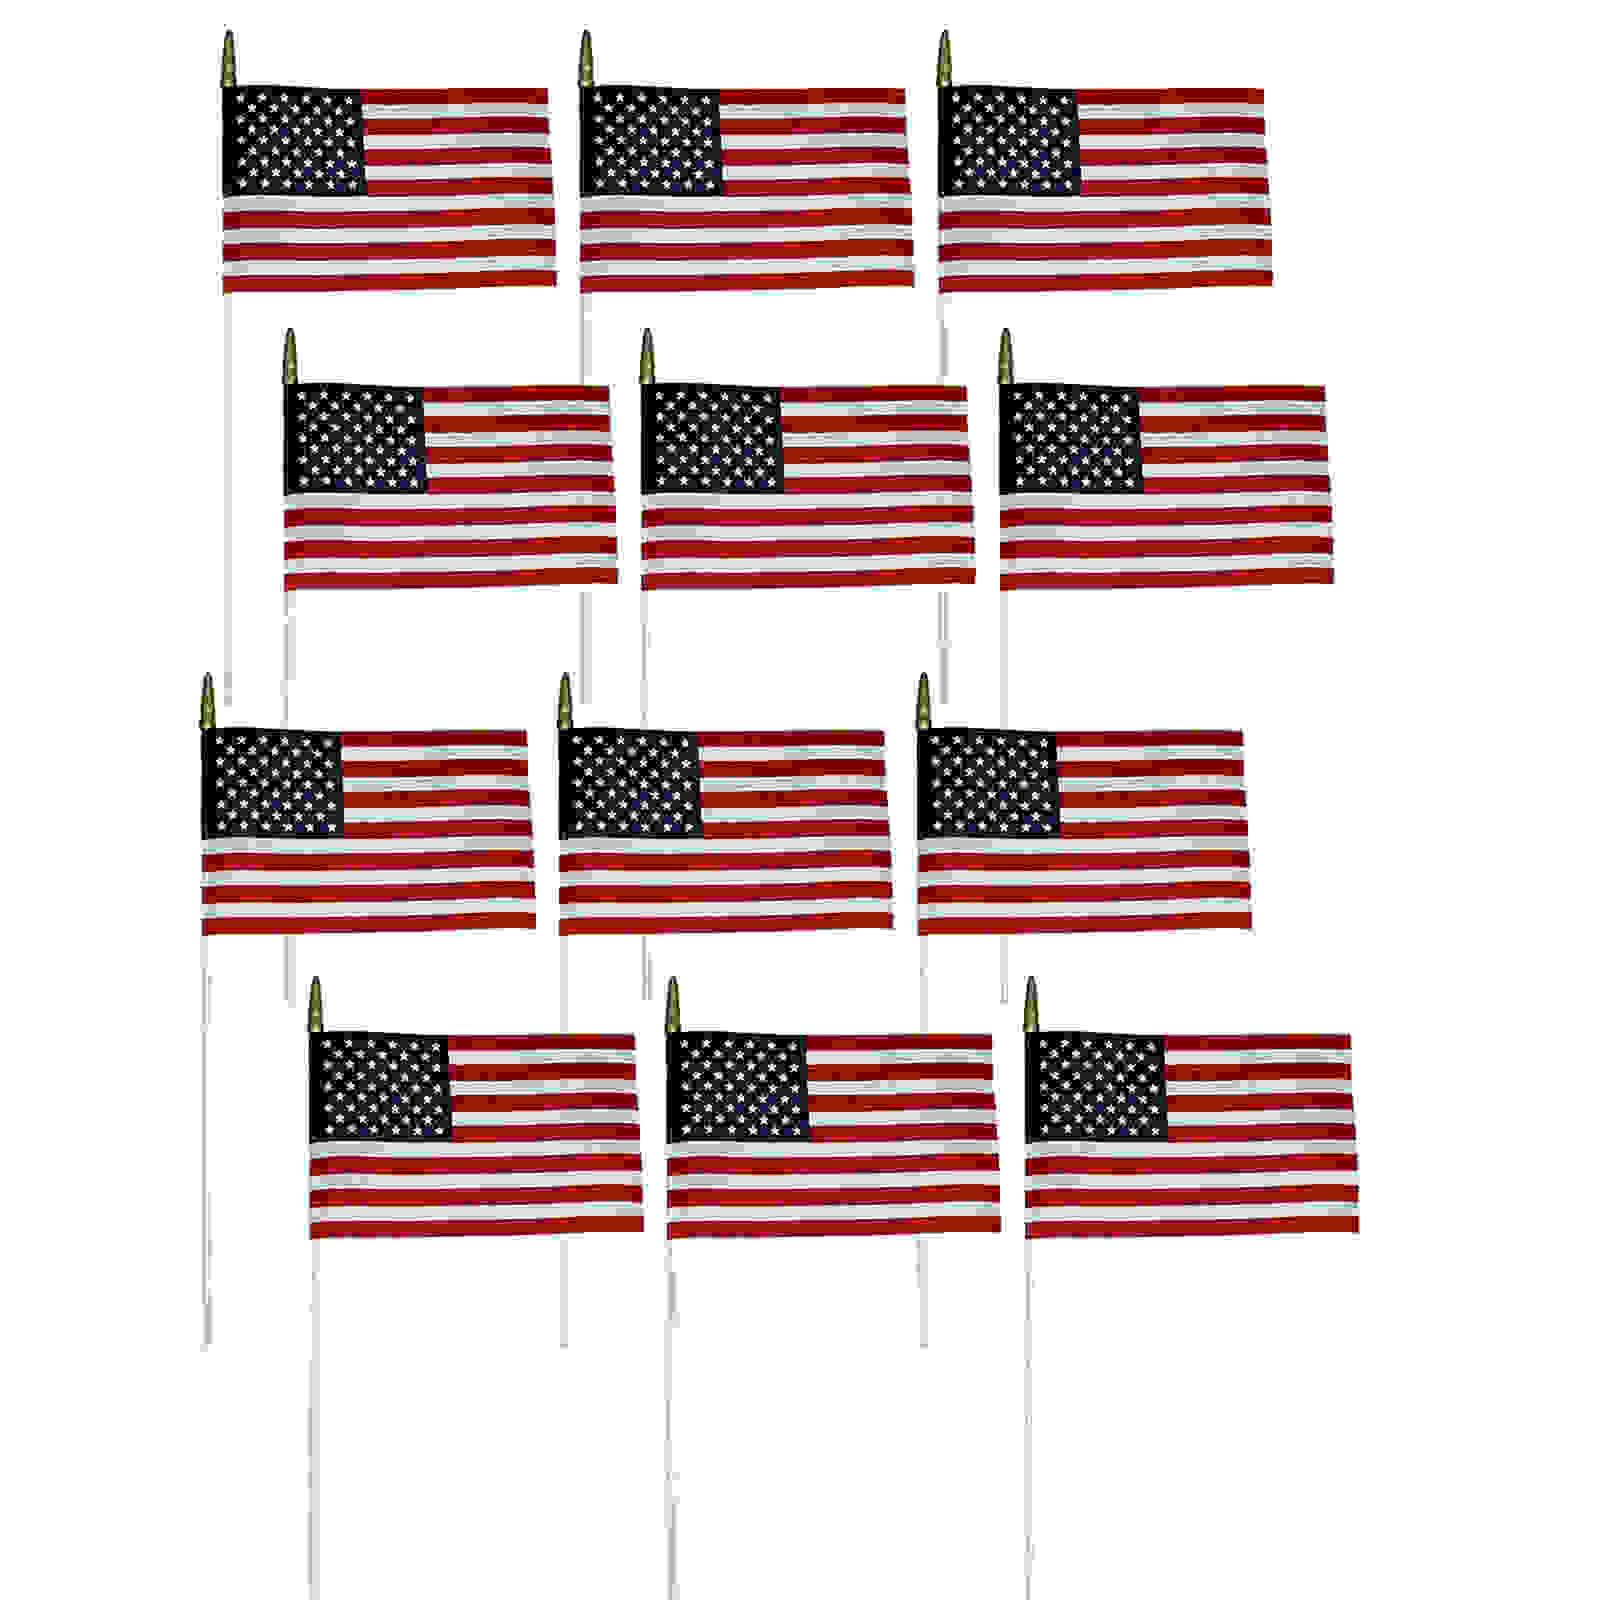 Verona Brand U.S. Miniature Flag, 8" x 12", Pack of 12